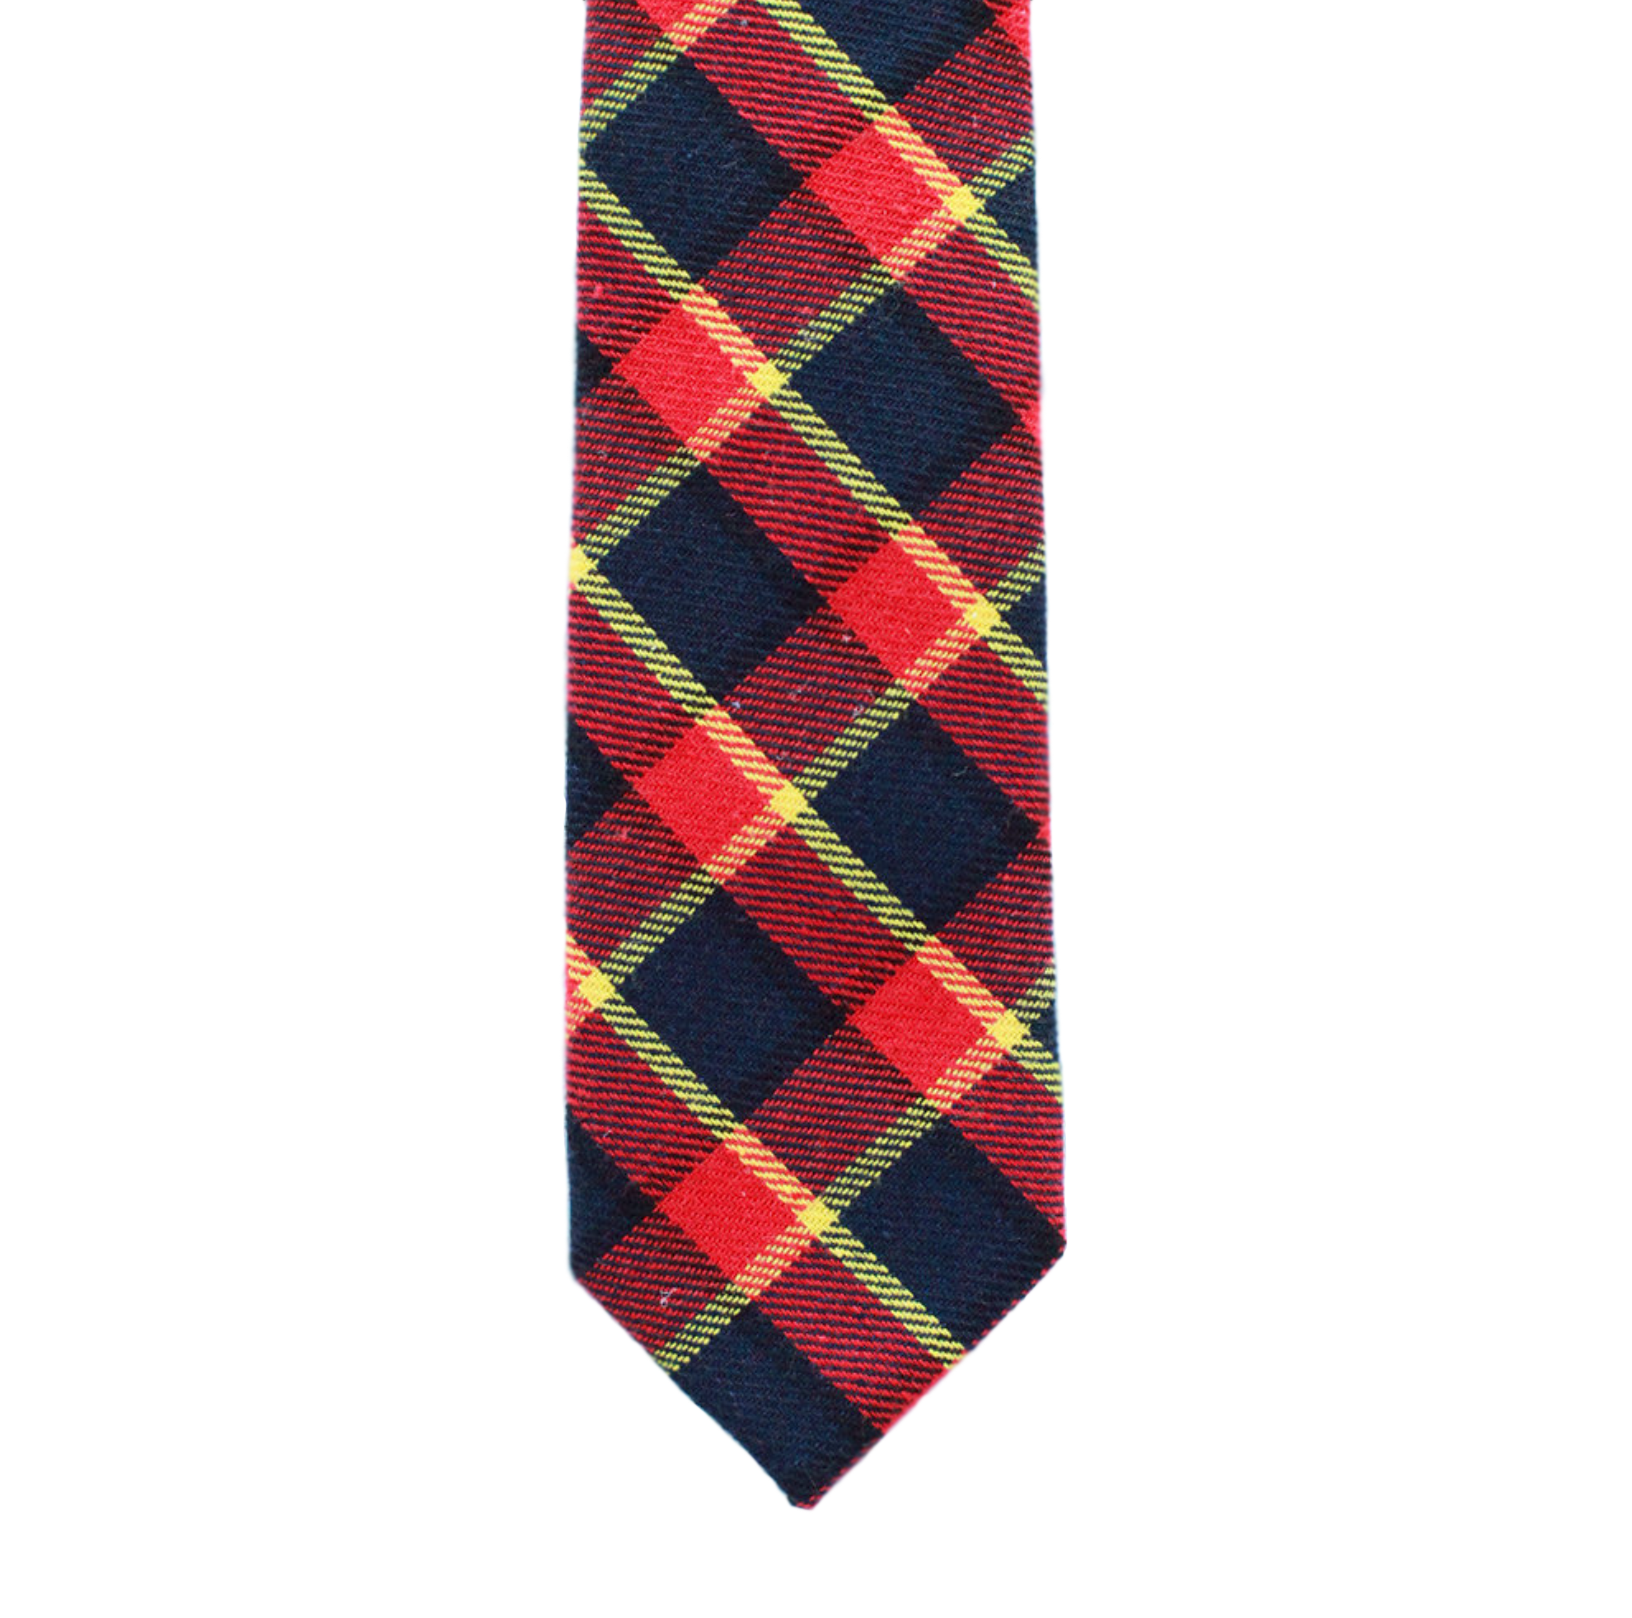 R9 - Red/Black/Yellow Plaid Neck Tie - Standard Width